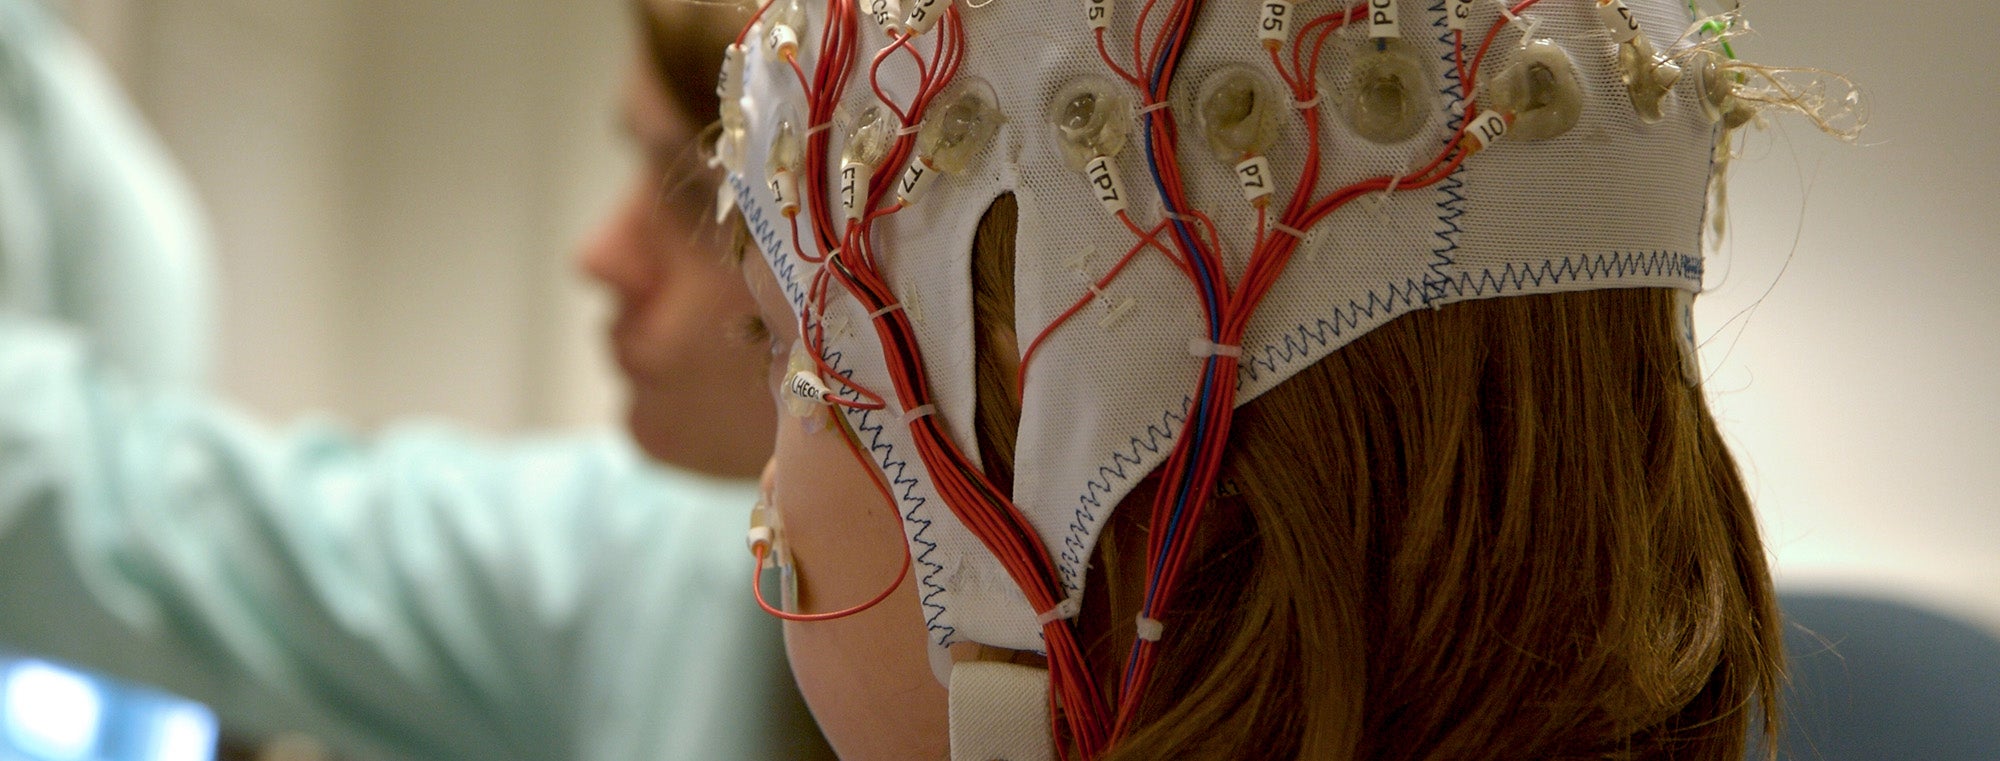 Neurodiagnostic Technology header image